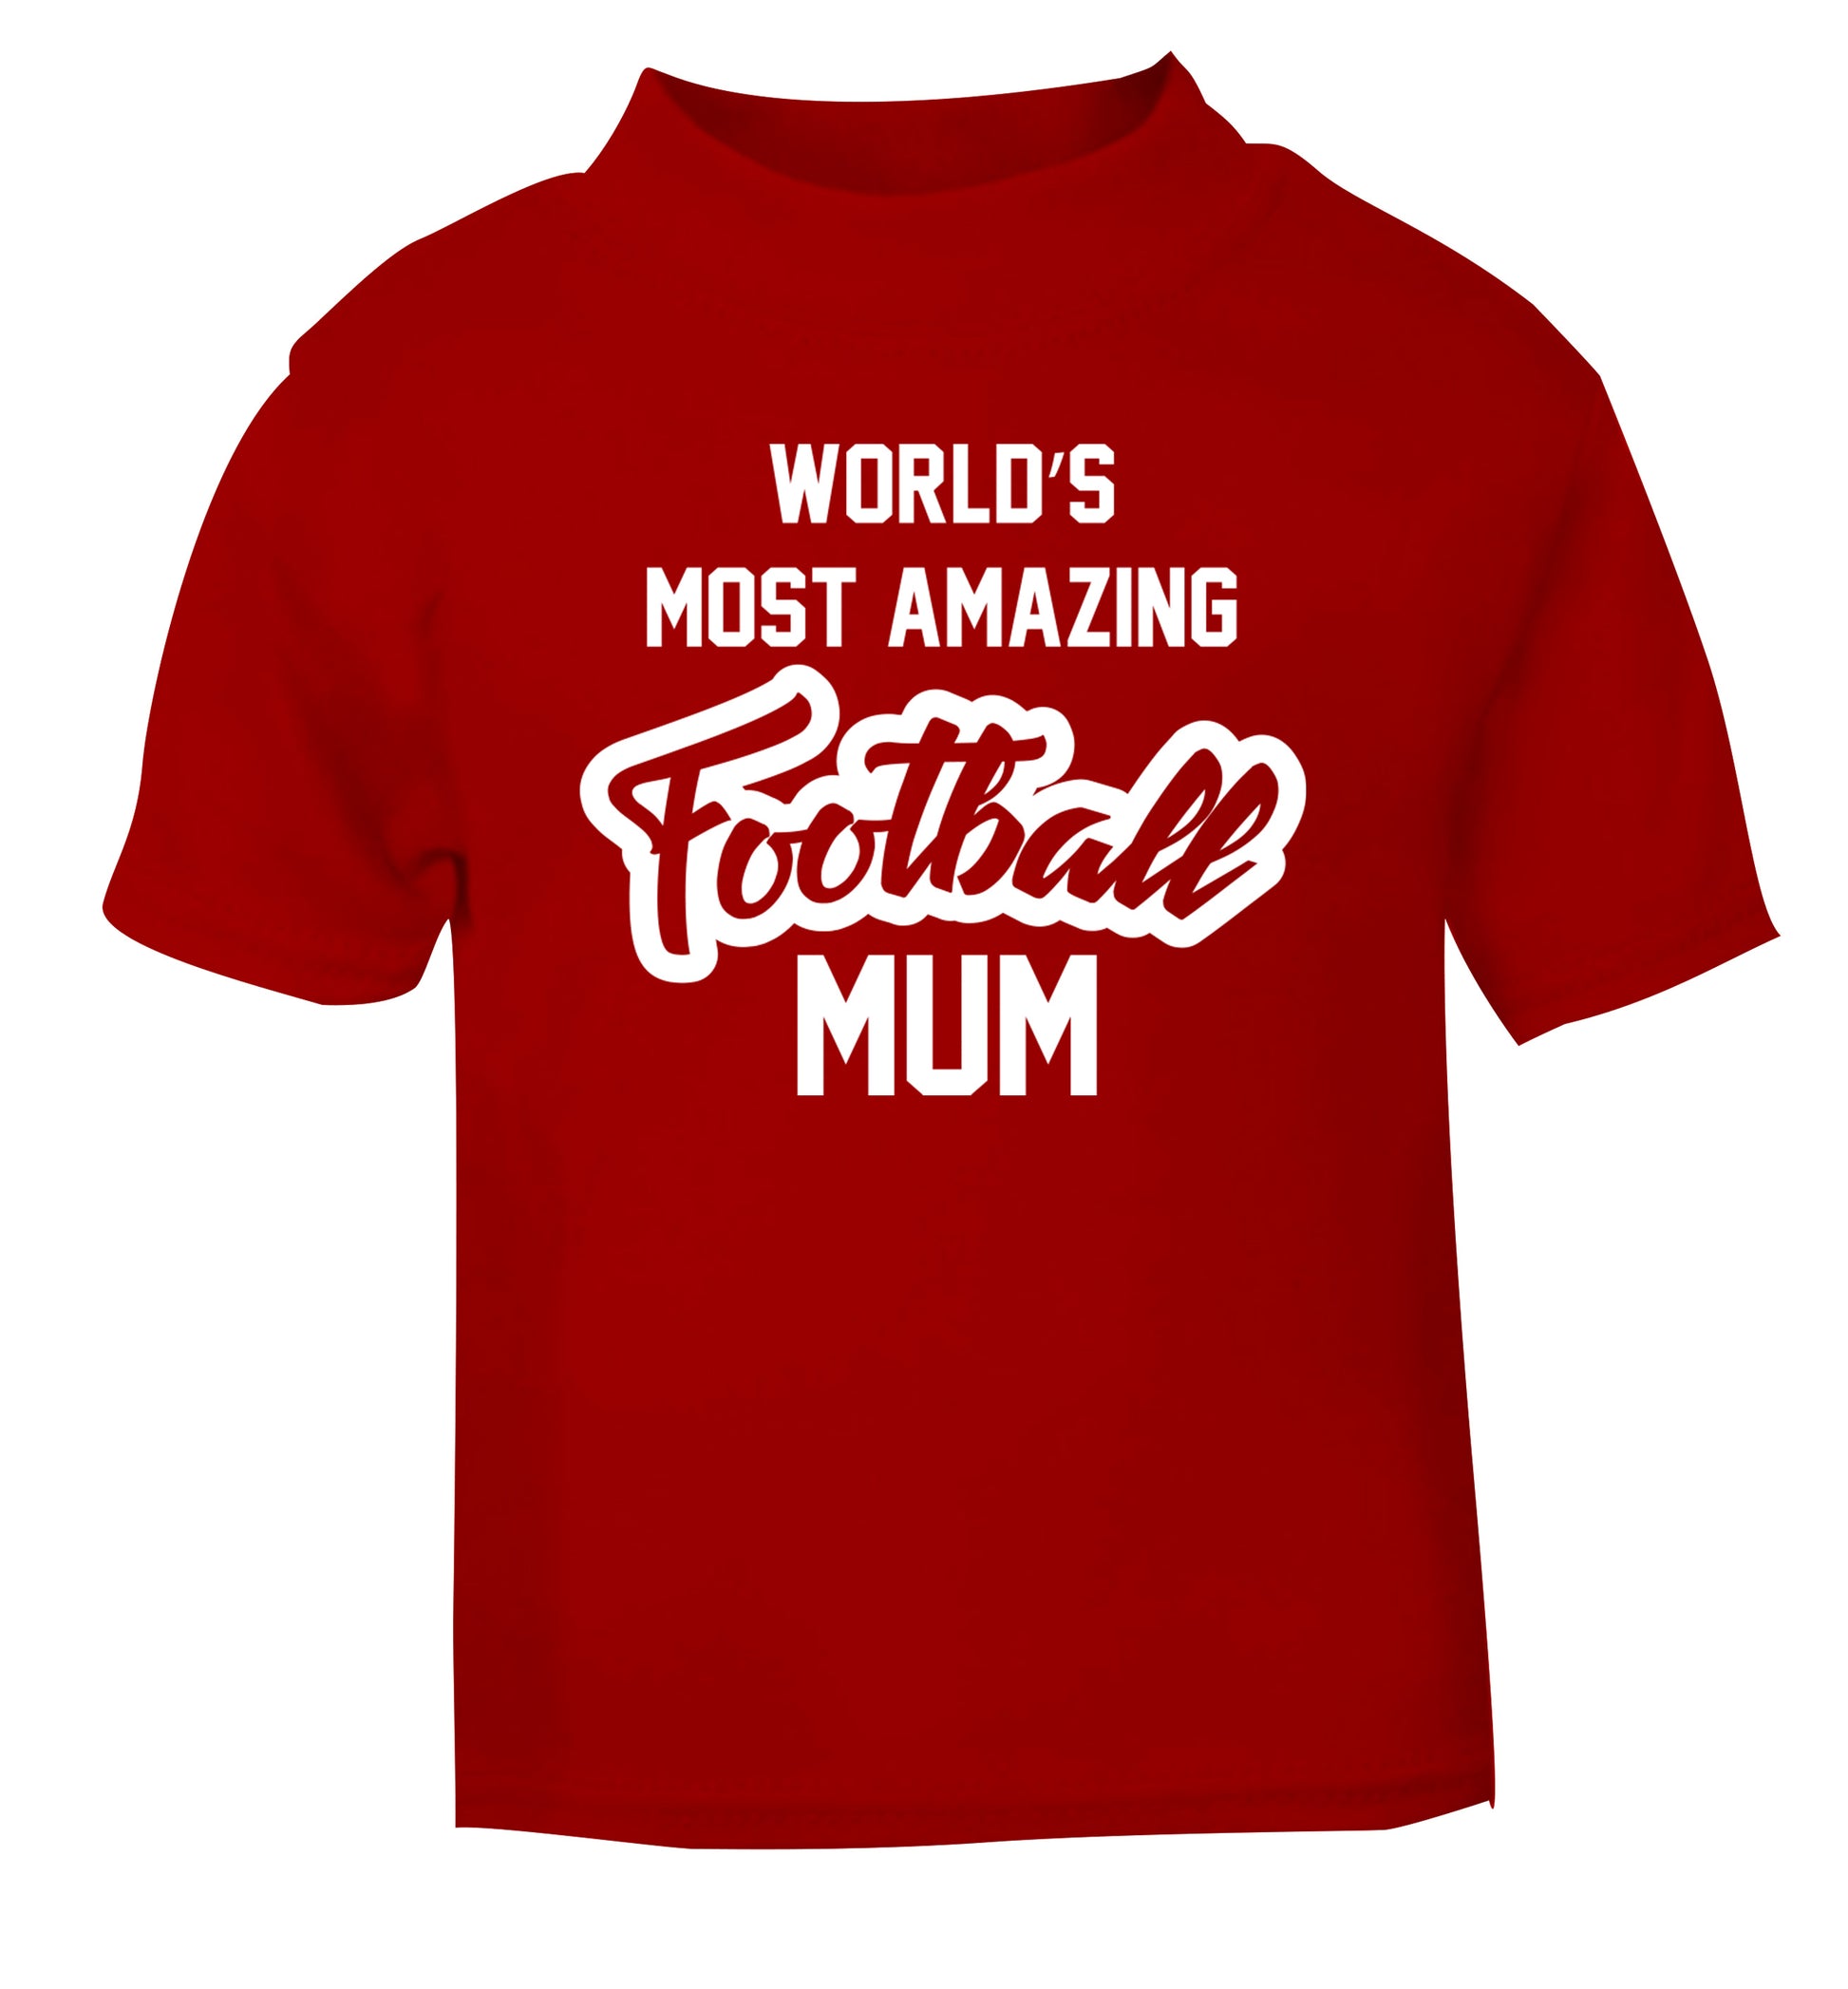 Worlds most amazing football mum red Baby Toddler Tshirt 2 Years